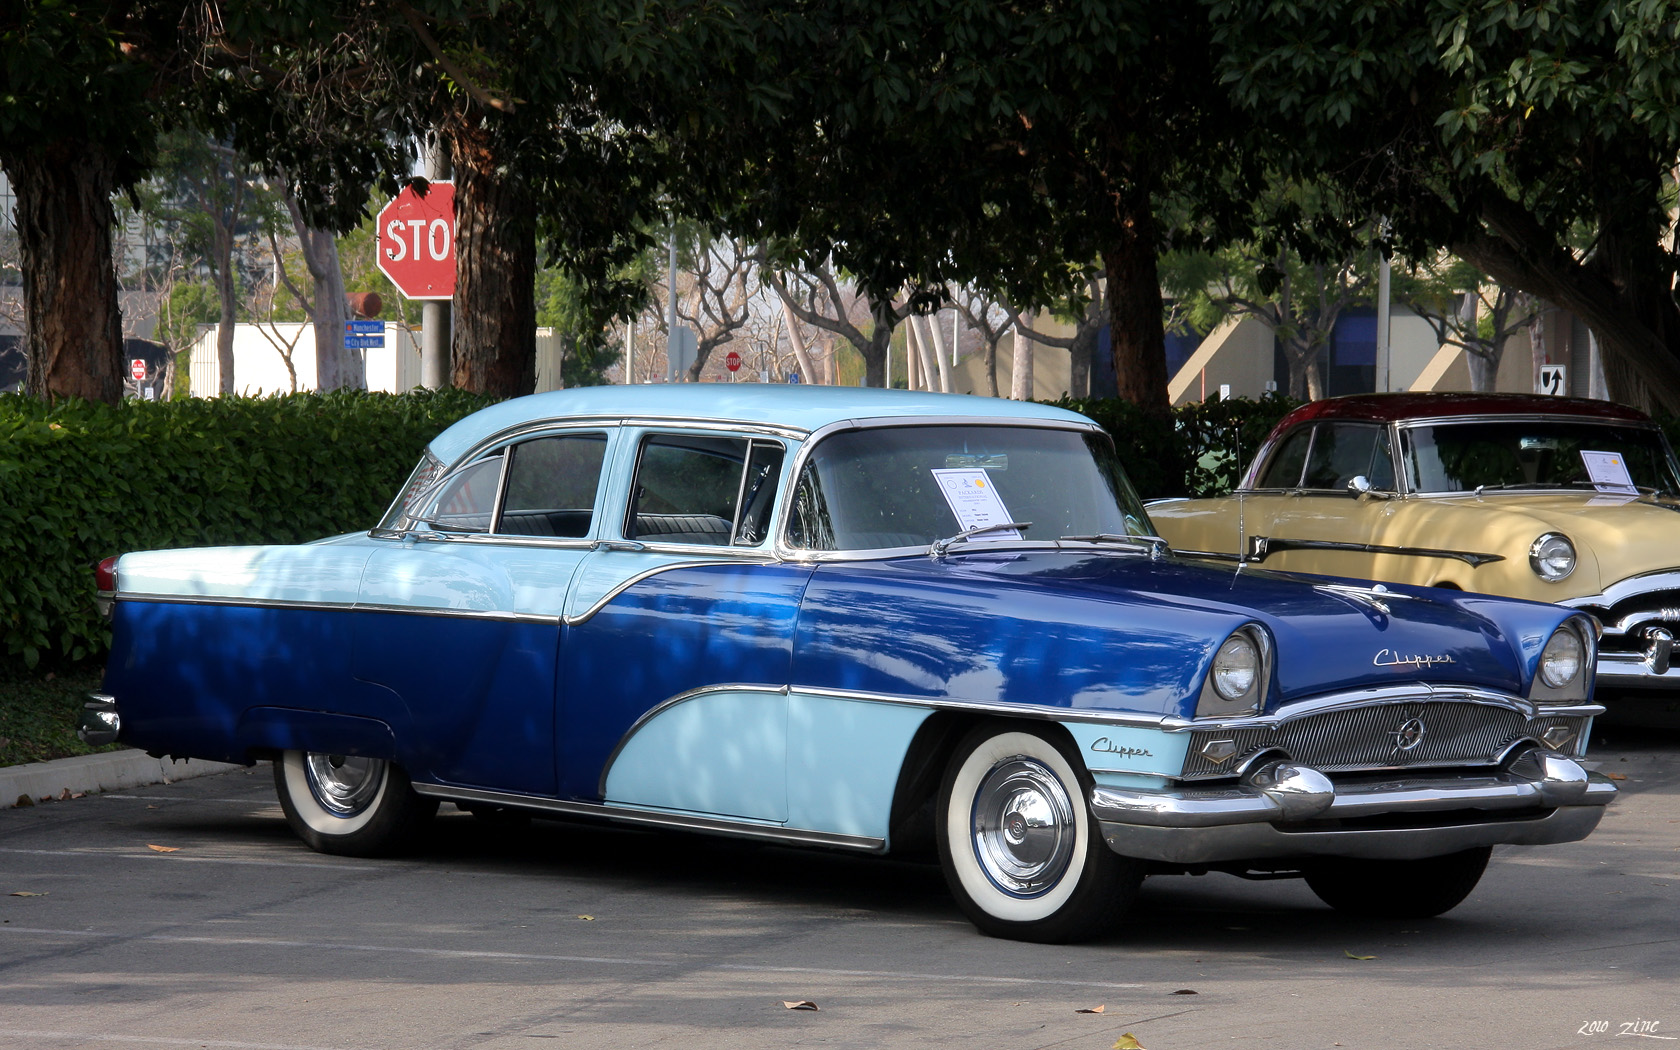 File:1955-Packard-Clipper-Custom-4dr-Sedan.jpg - Wikimedia Commons